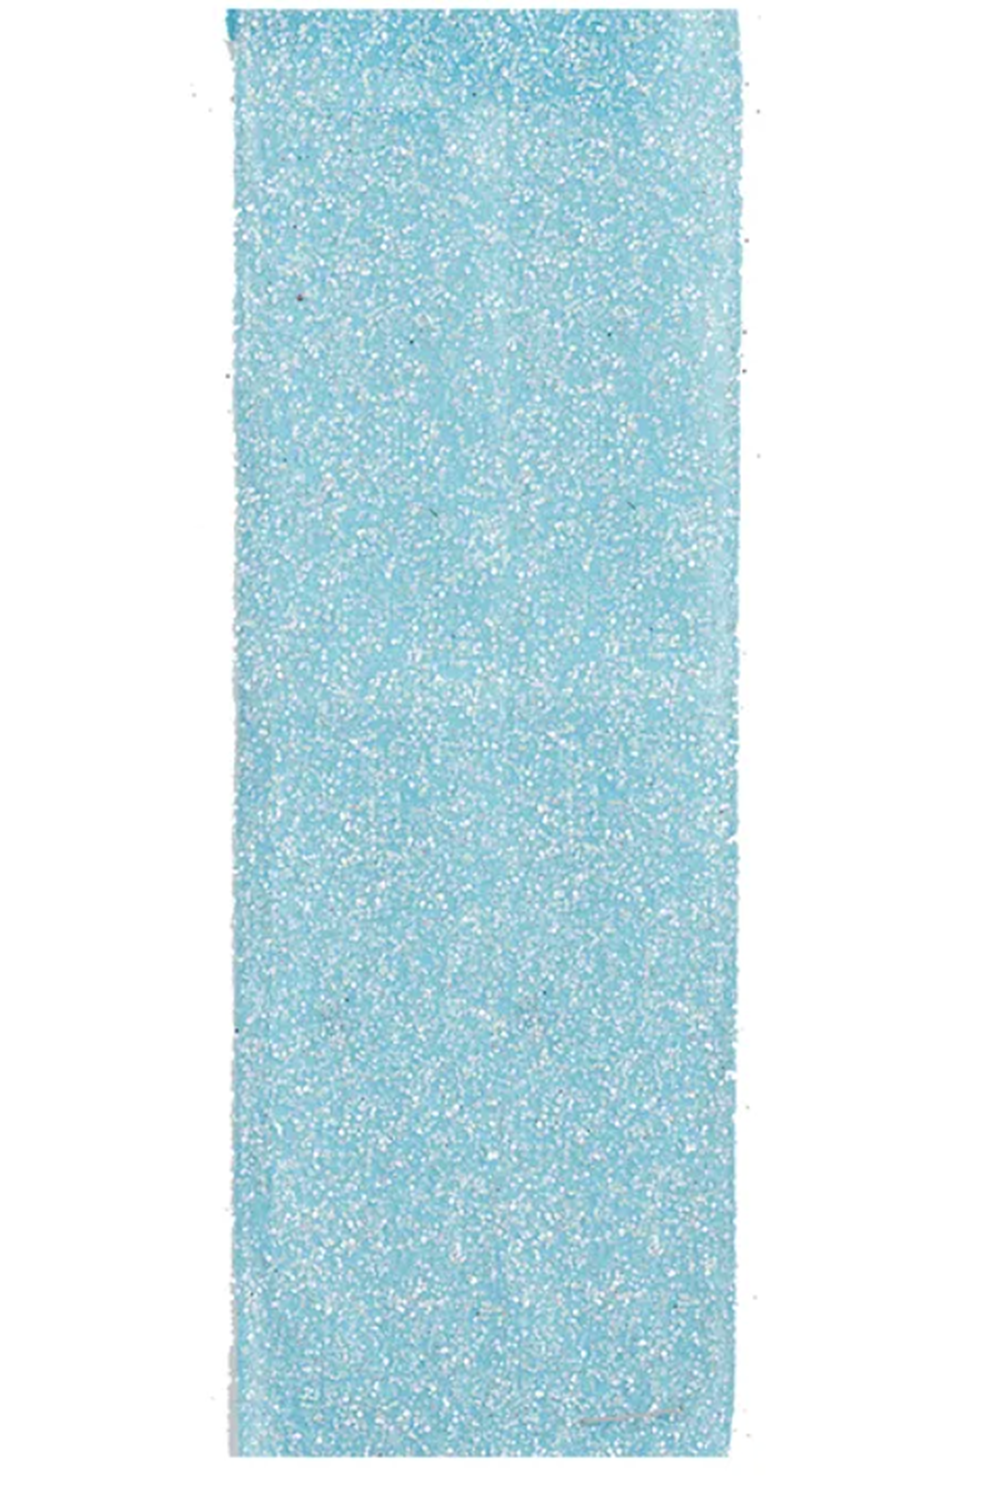 SIDEWALK SALE ITEM - Decorating Ribbon - Aqua Frosted Fabric